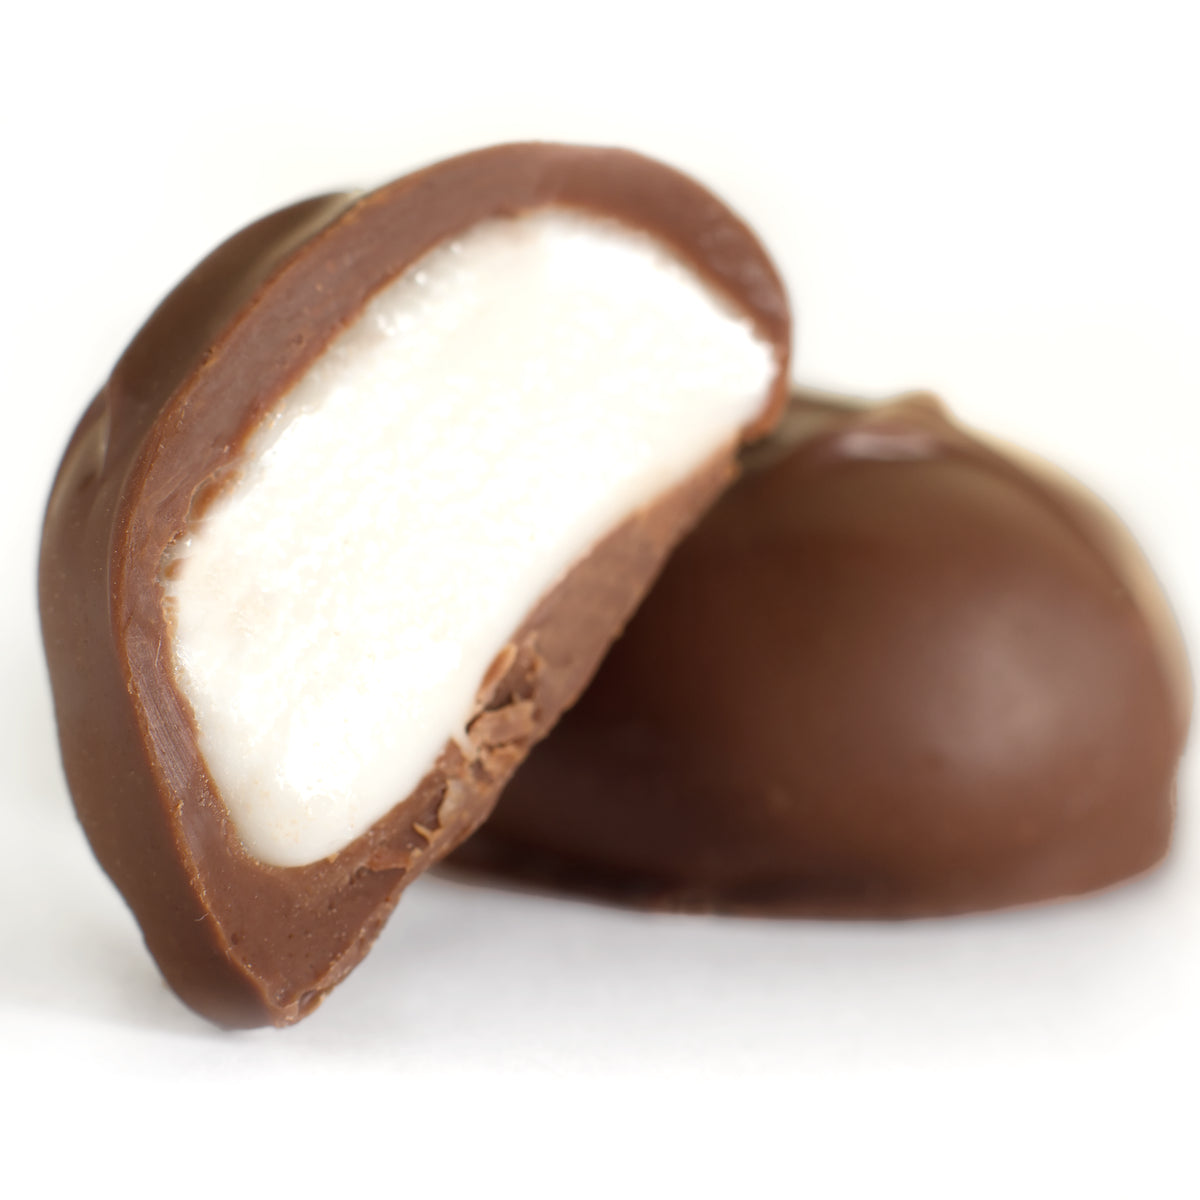 Milk Chocolate Creams - Assorted Flavors